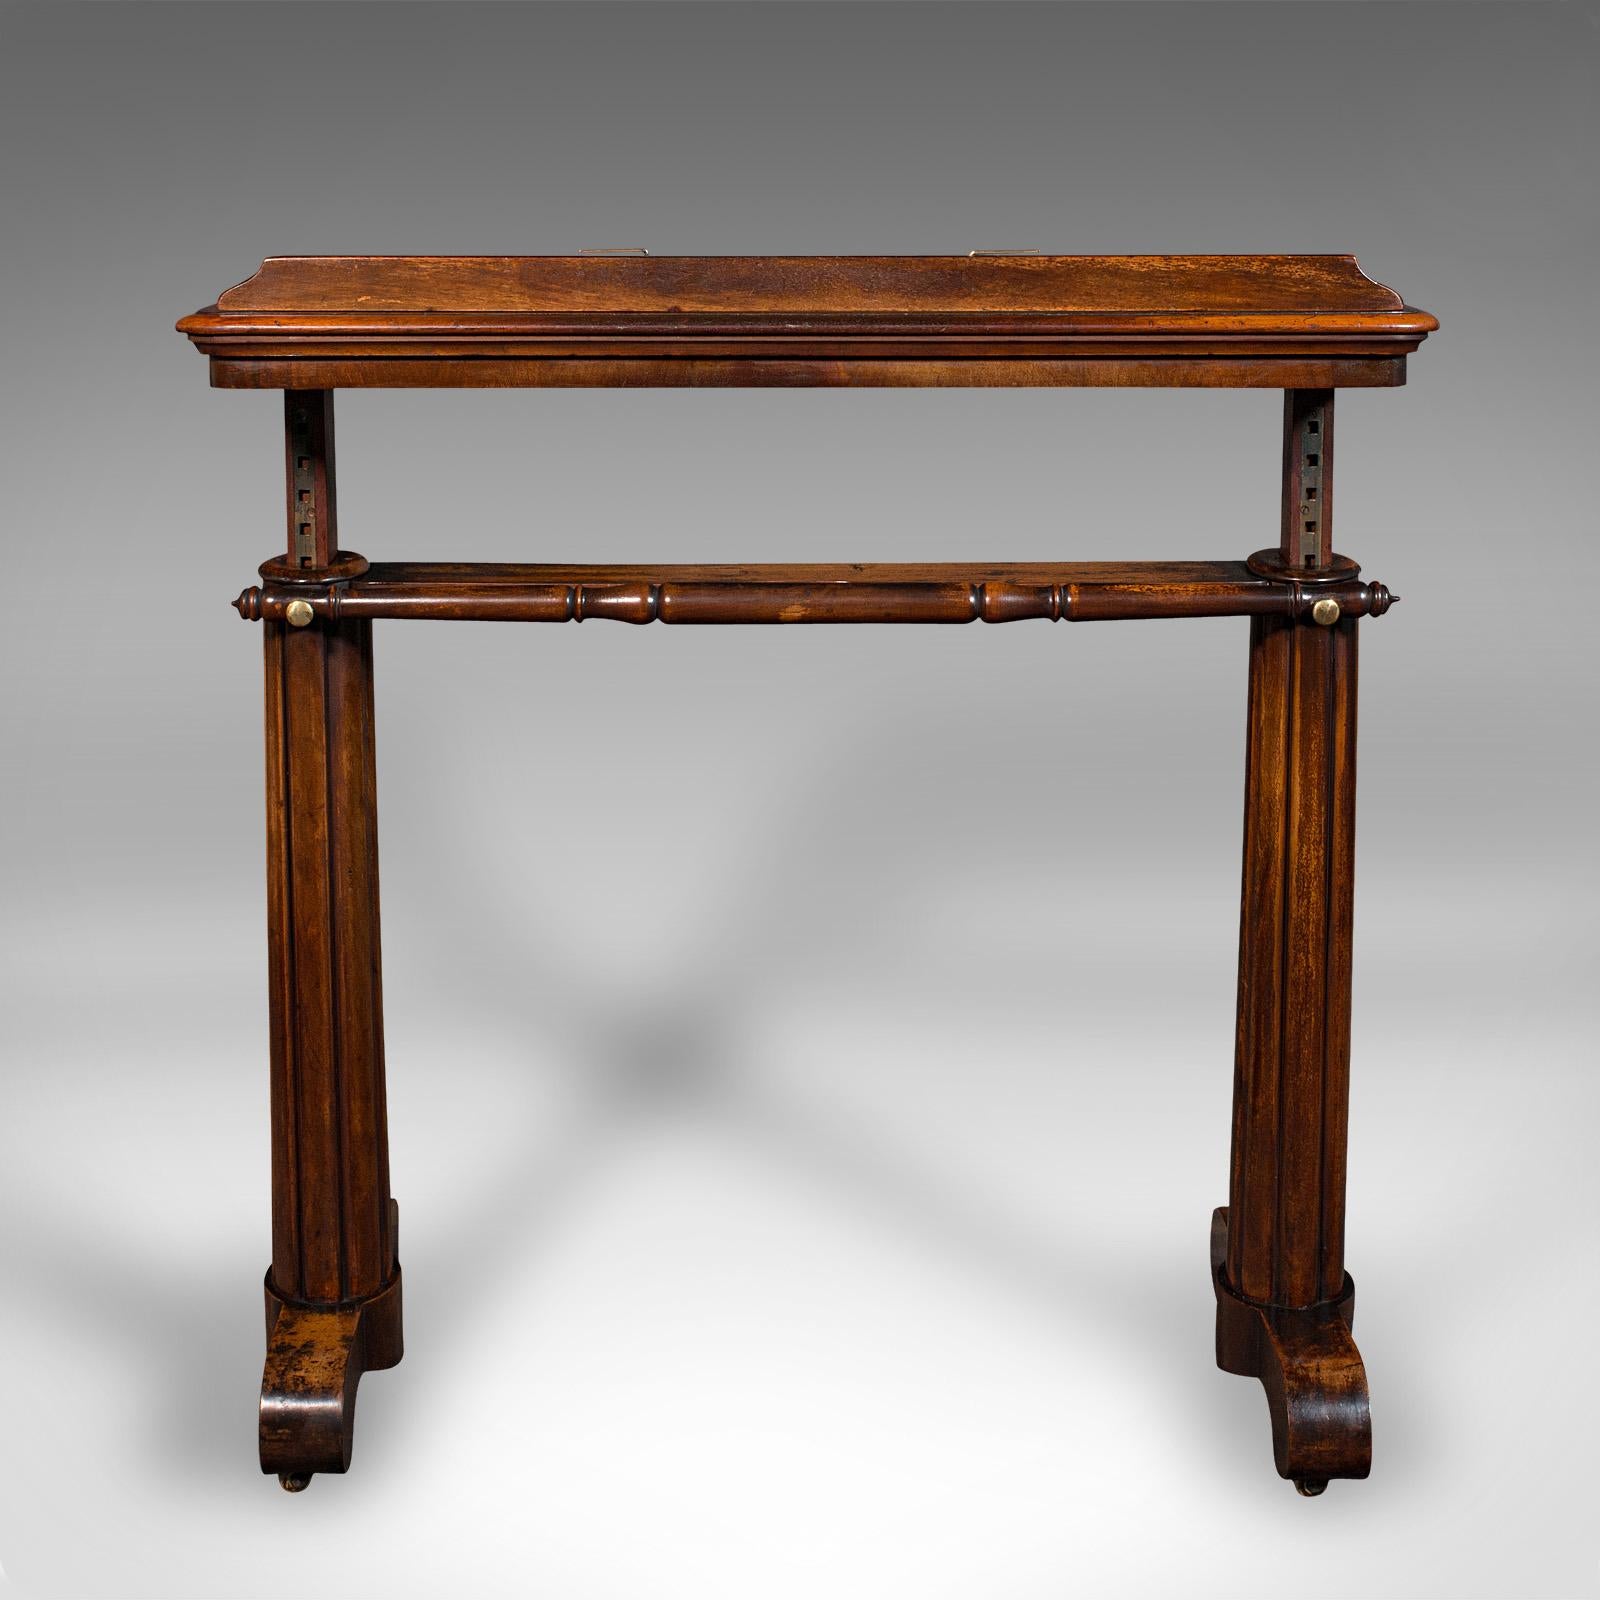 British Antique Adjustable Reading Table, English, Lectern, Recital Stand, William IV